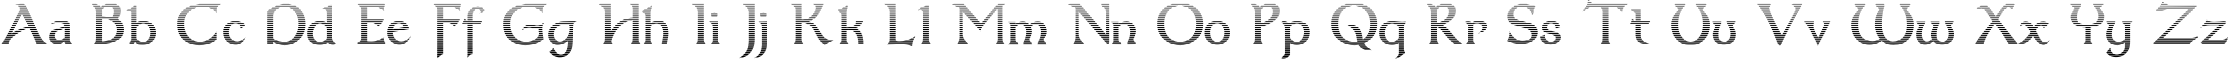 Пример написания английского алфавита шрифтом Dumbledor 3 Cut Down